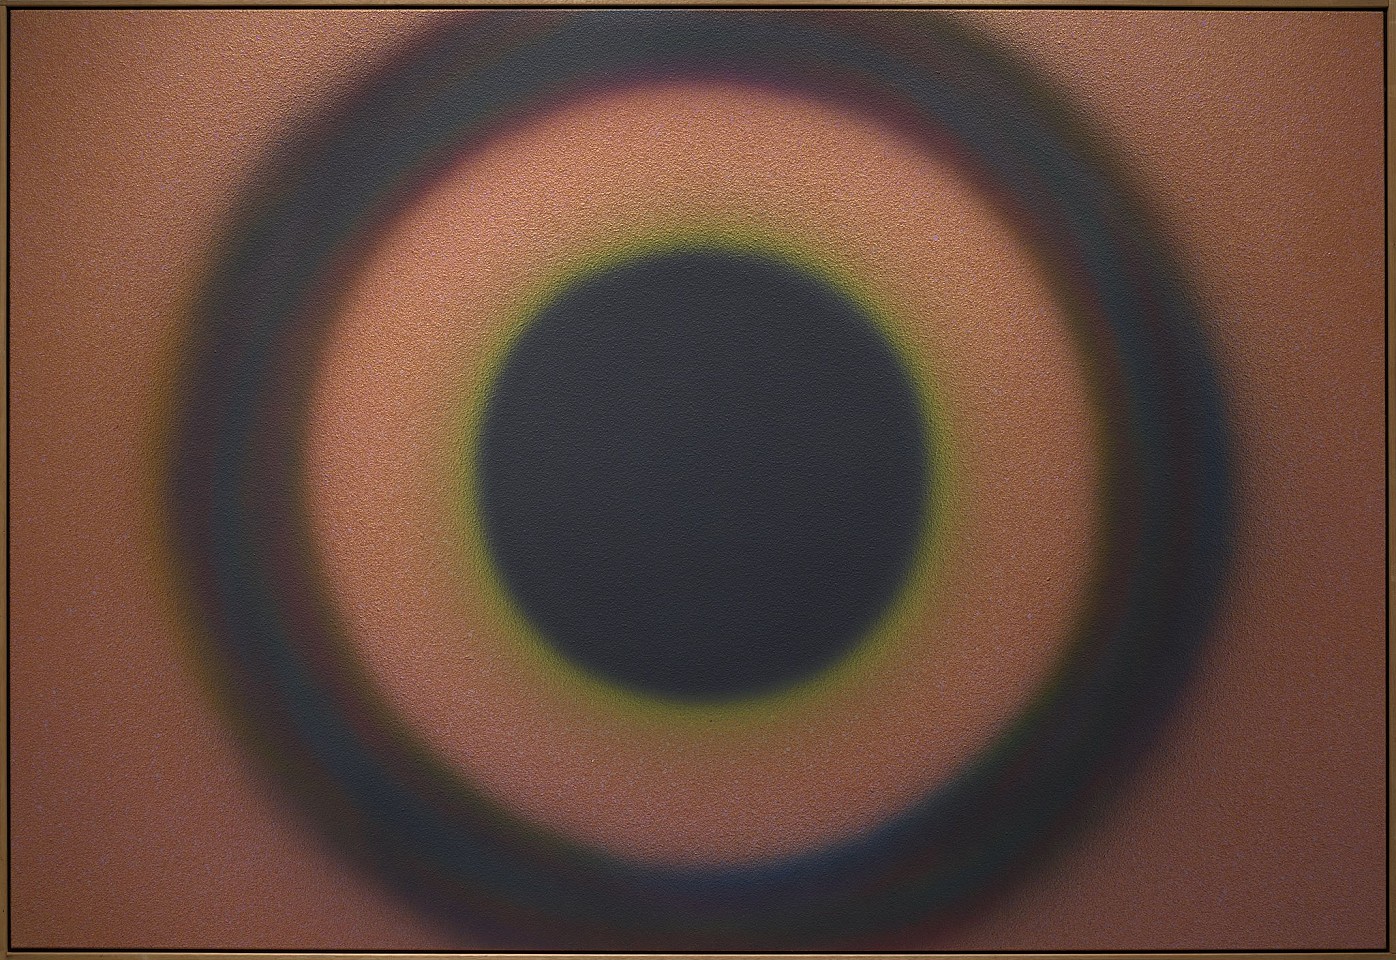 Dan Christensen, Corso, 1991
Acrylic on canvas, 66 1/2 x 97 in. (168.9 x 246.4 cm)
CHR-00225